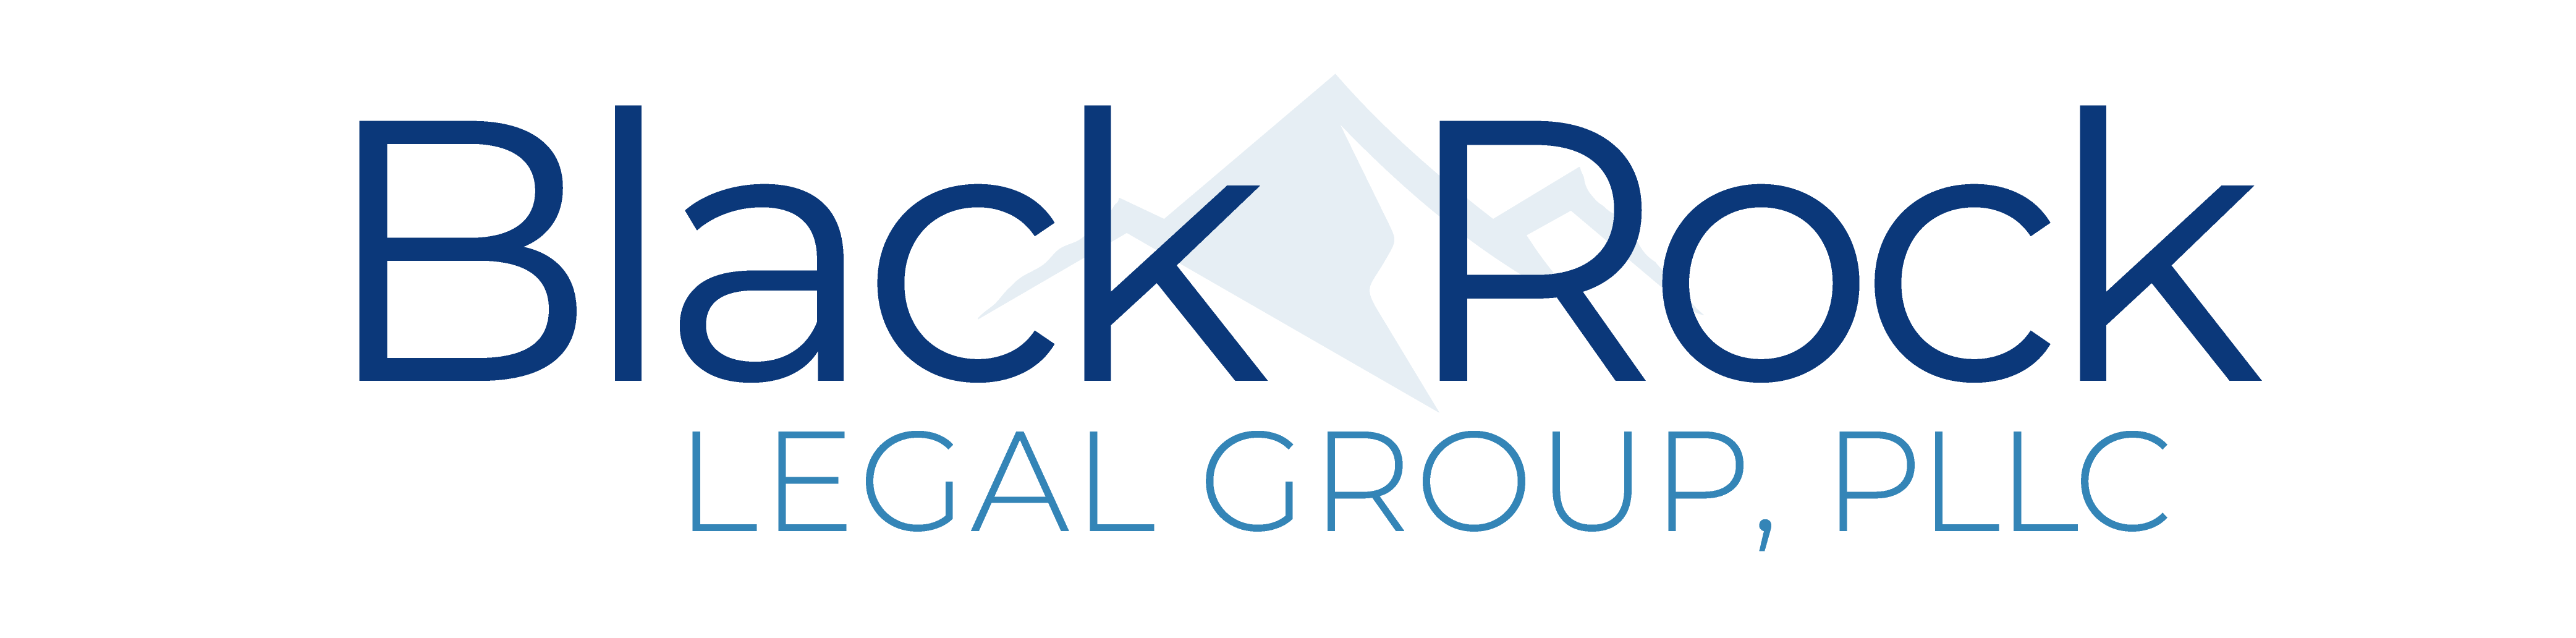 Black Rock Legal Group, PLLC